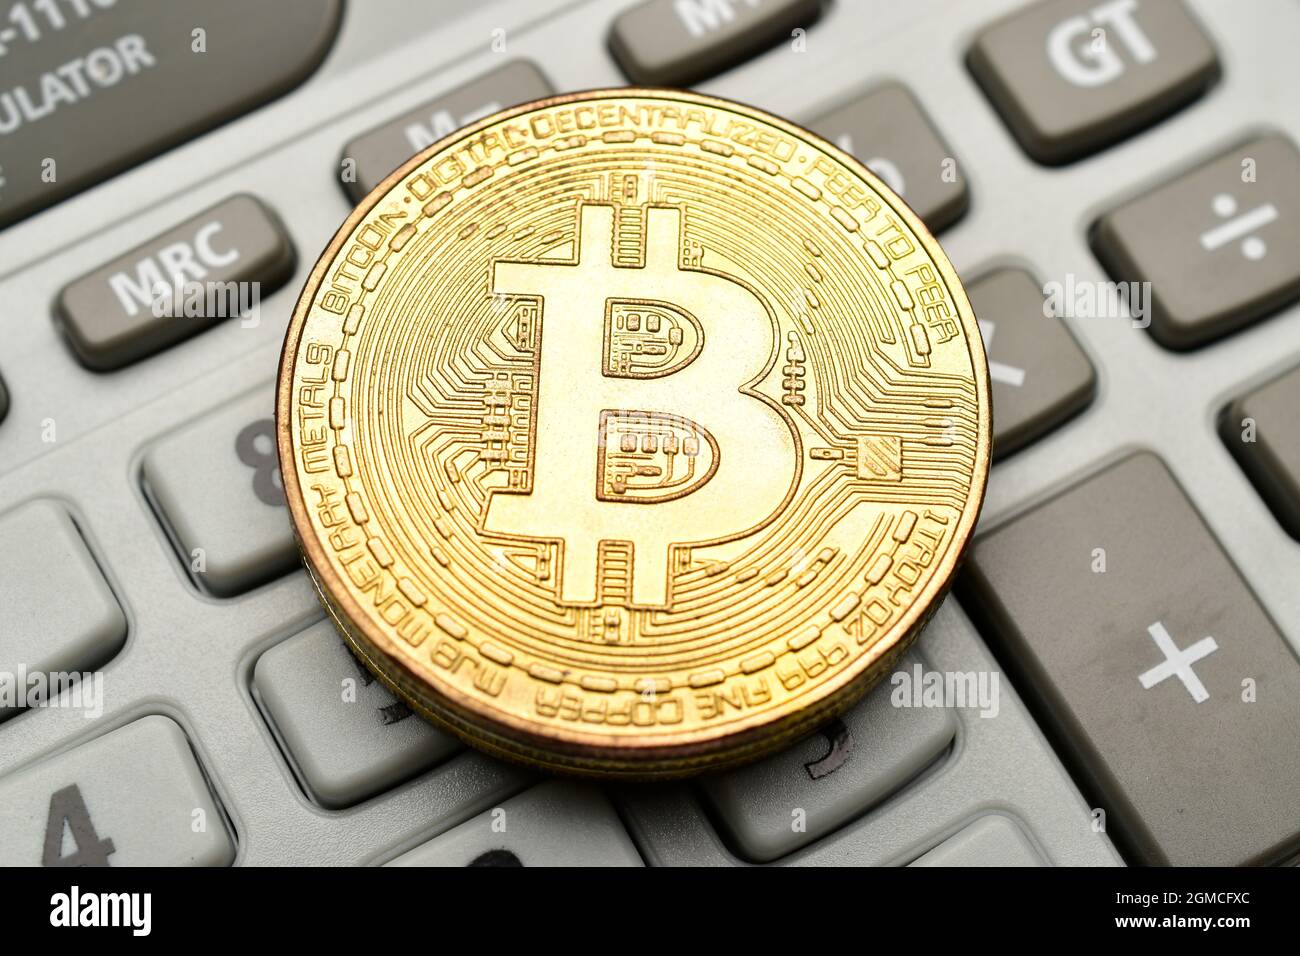 Bitcoin on top of calculator Stock Photo - Alamy